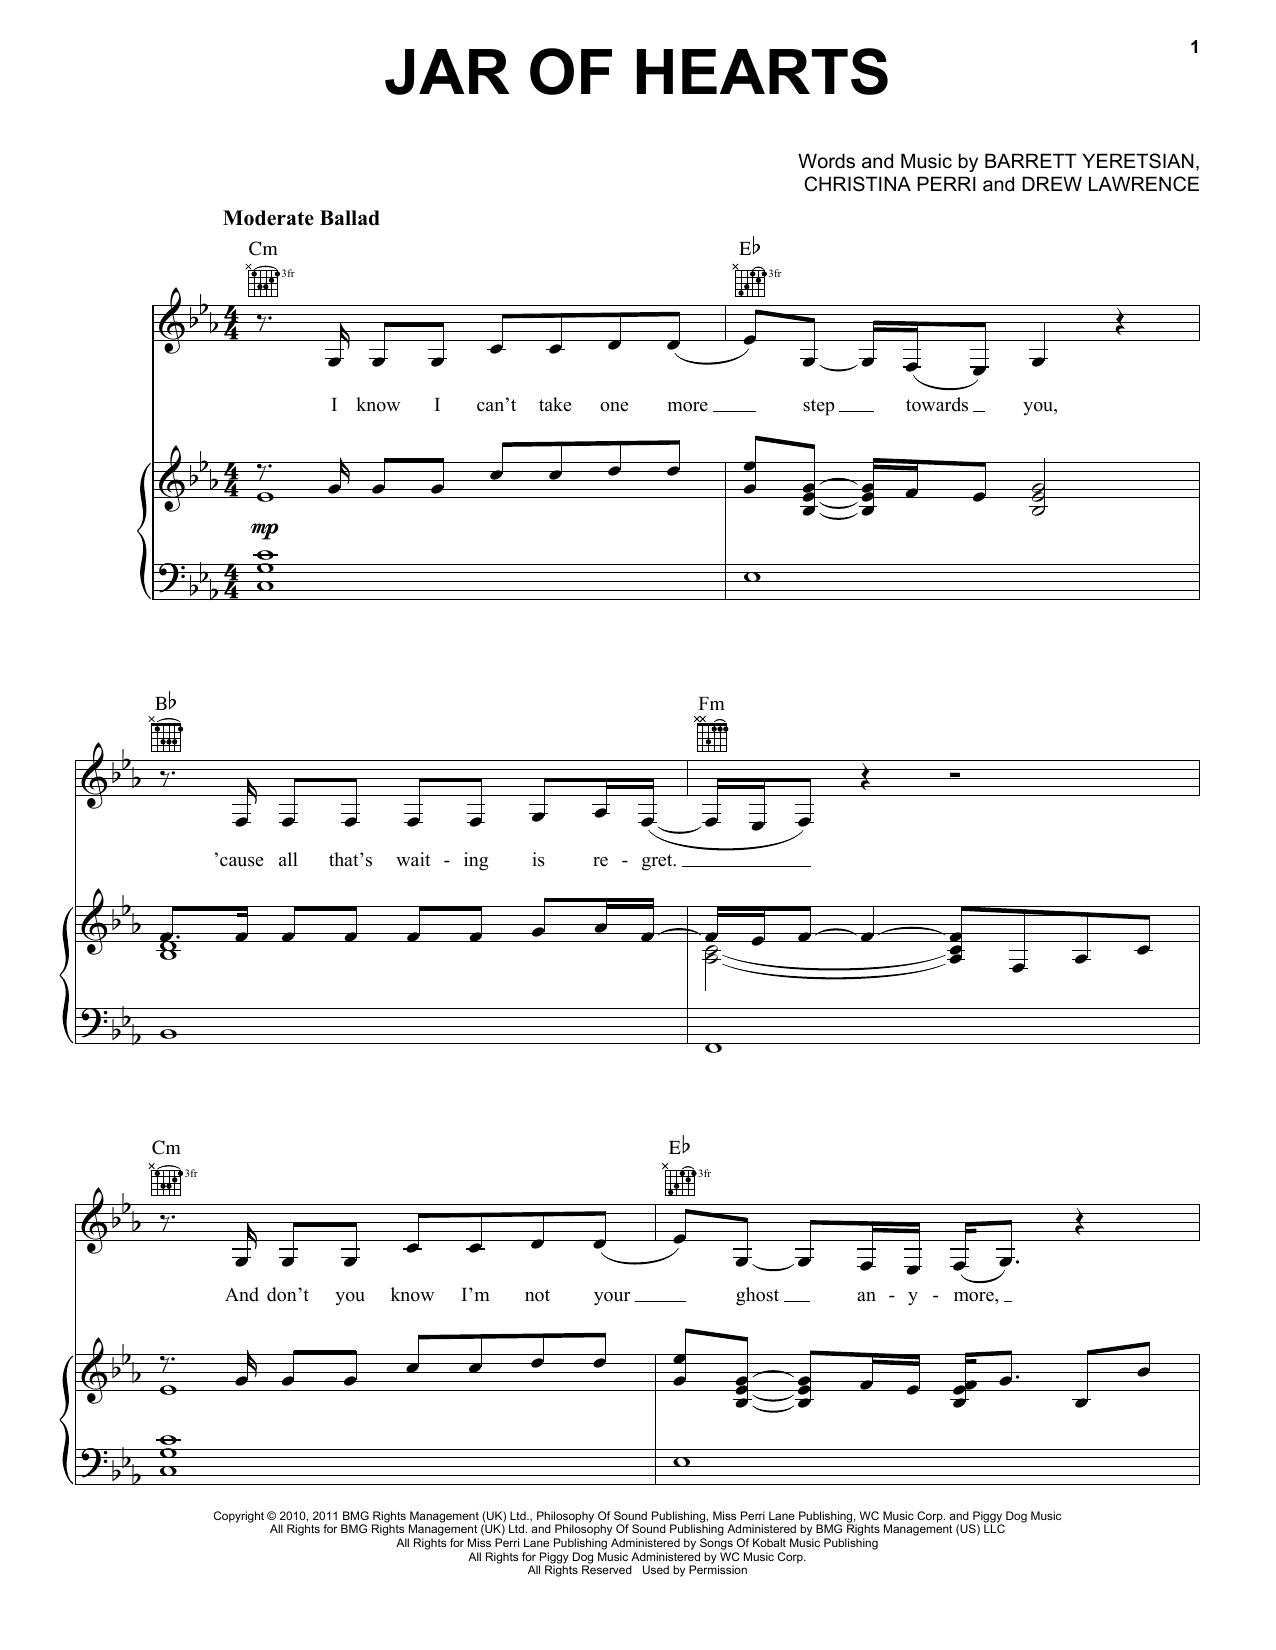 Christina Perri Jar Of Hearts Sheet Music Notes & Chords for Violin - Download or Print PDF